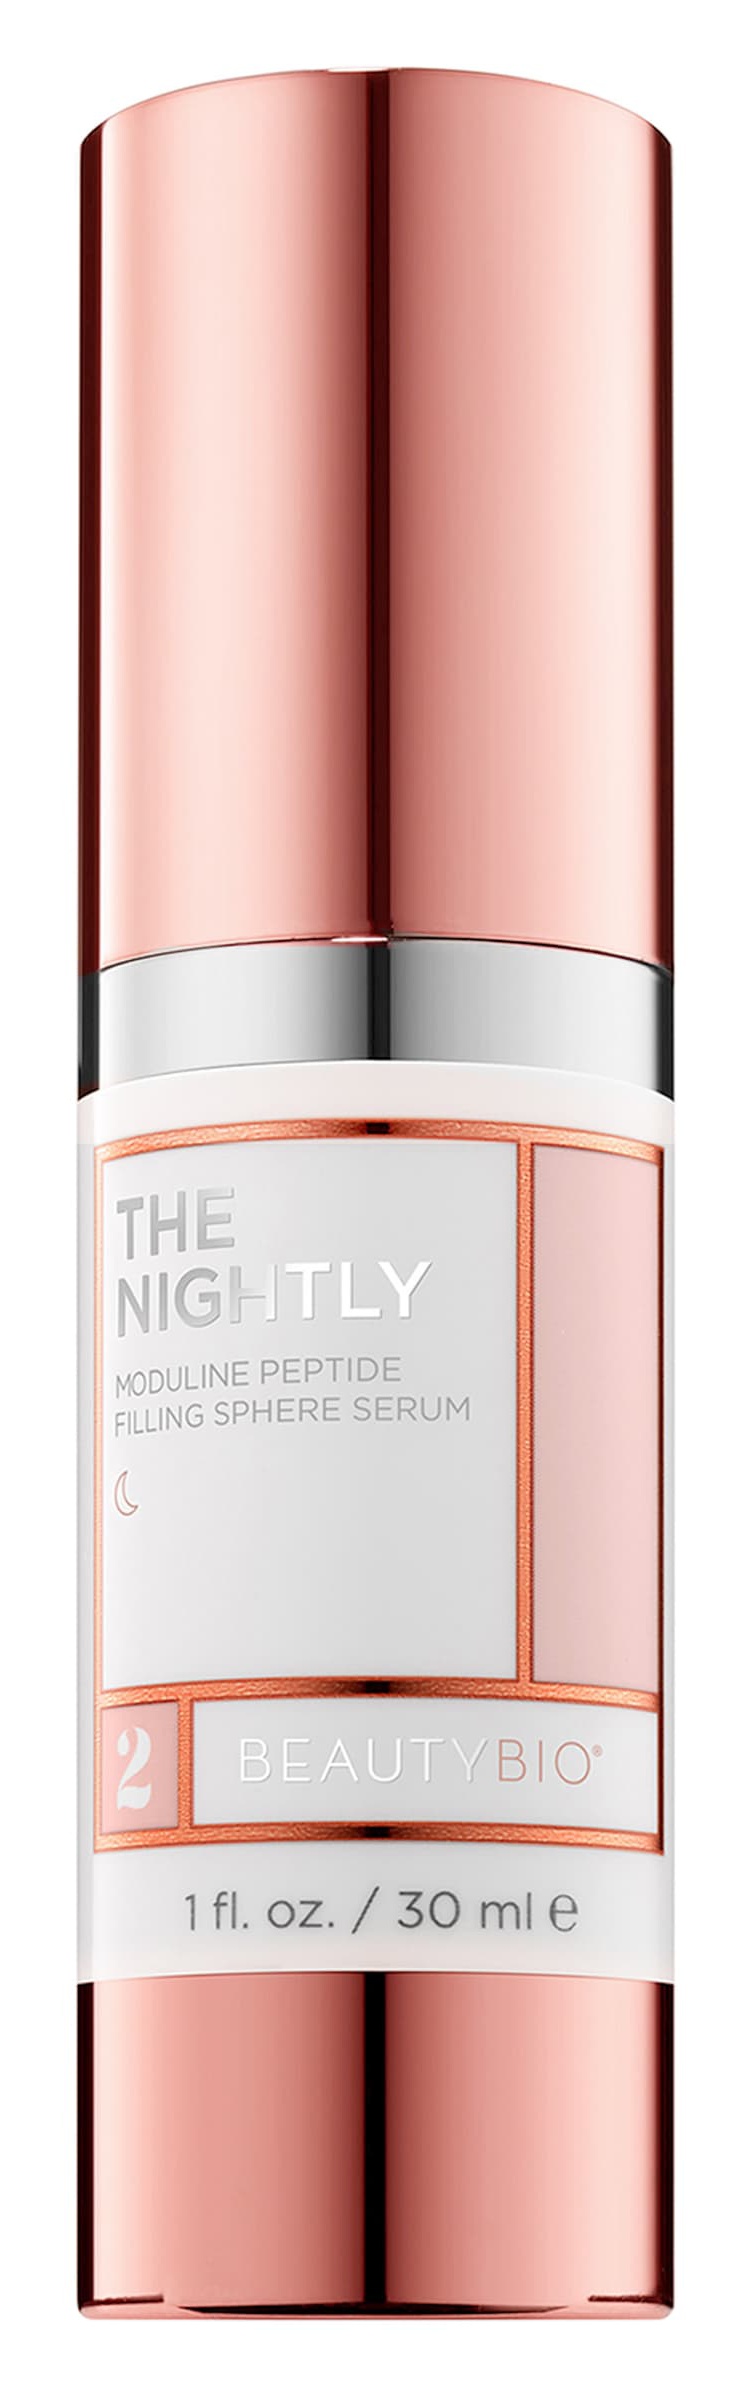 Beautybio The Nightly Moduline Peptide Filling Sphere Serum/ Retinol + Peptide Serum